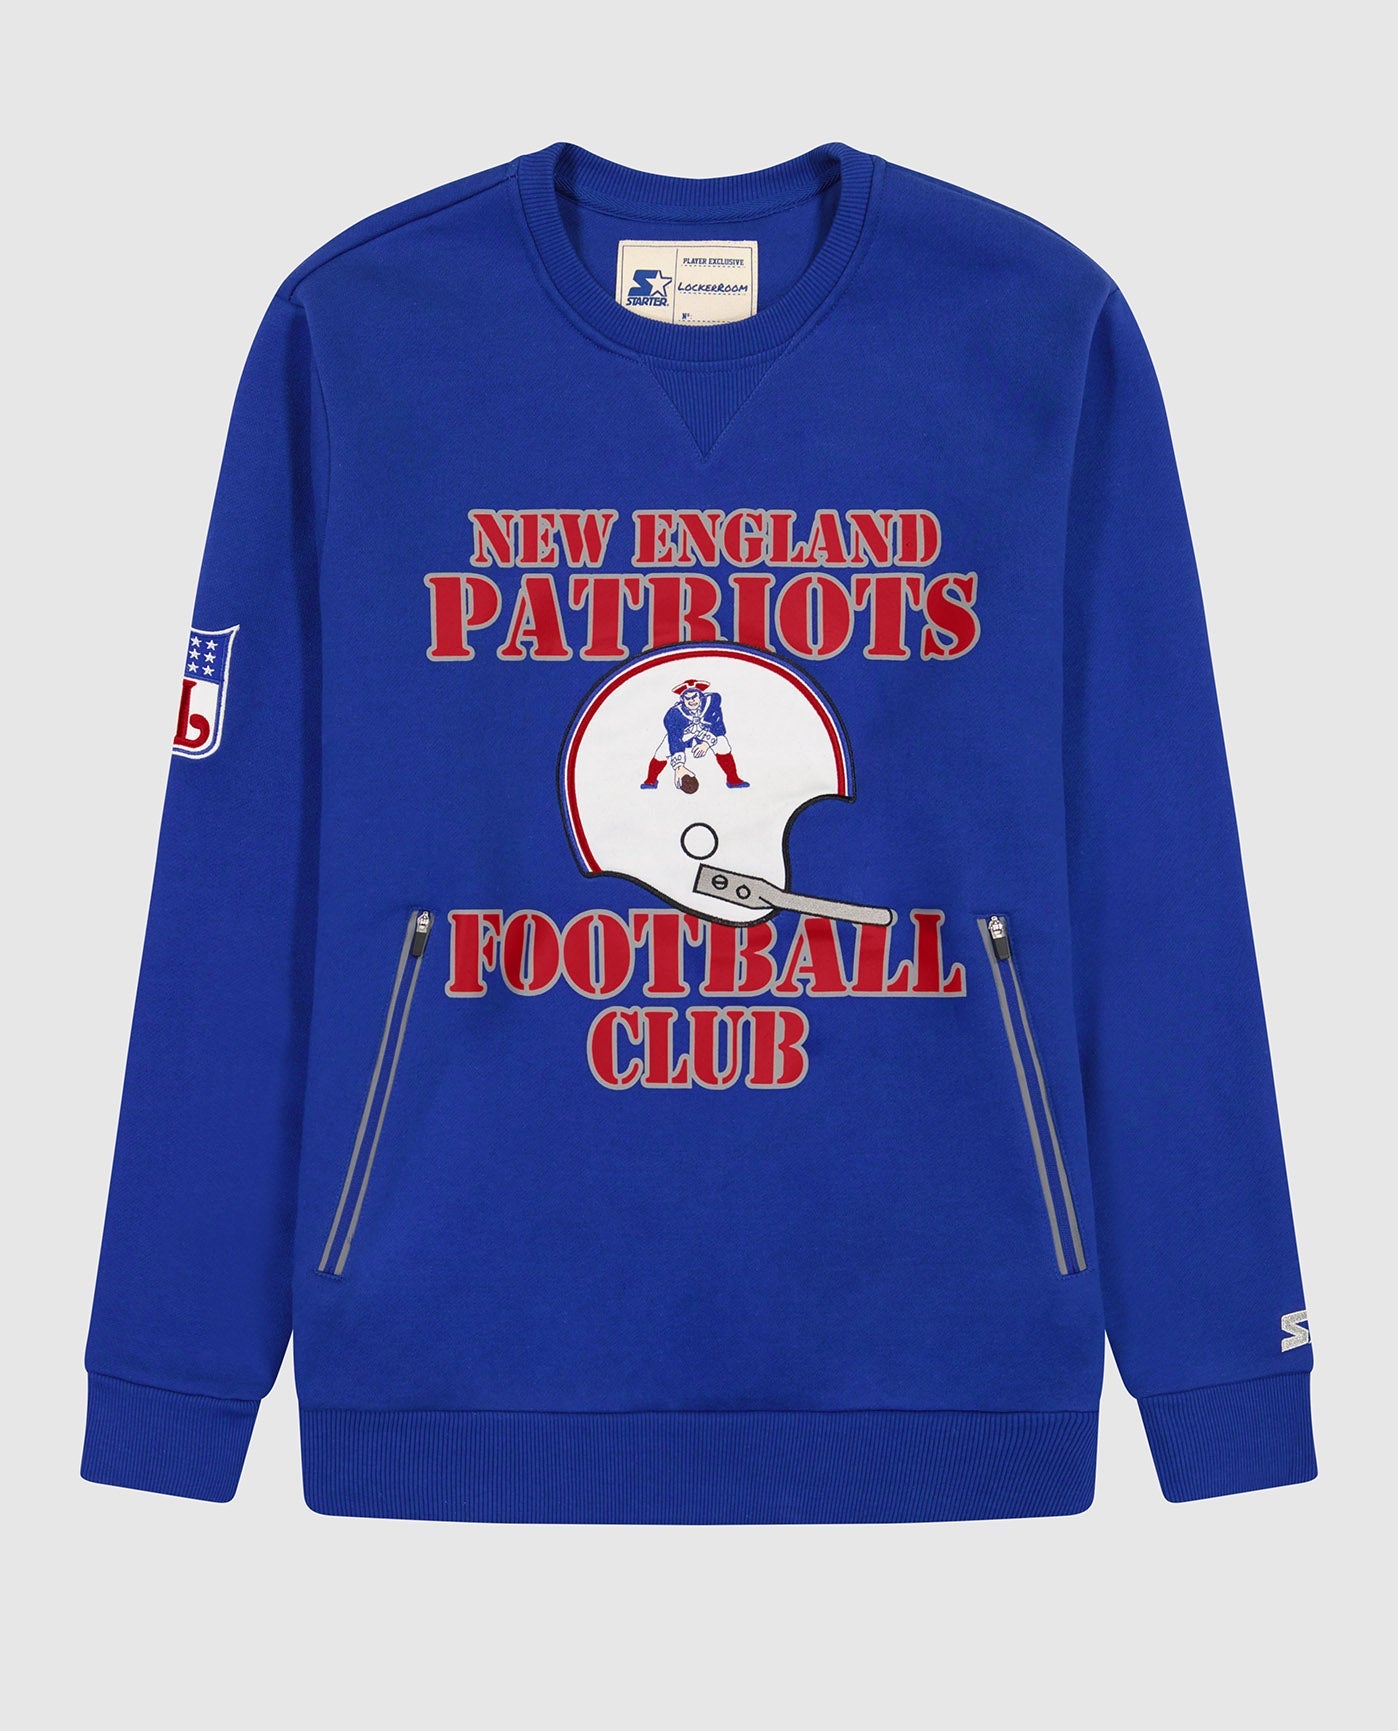 patriots retro sweatshirt